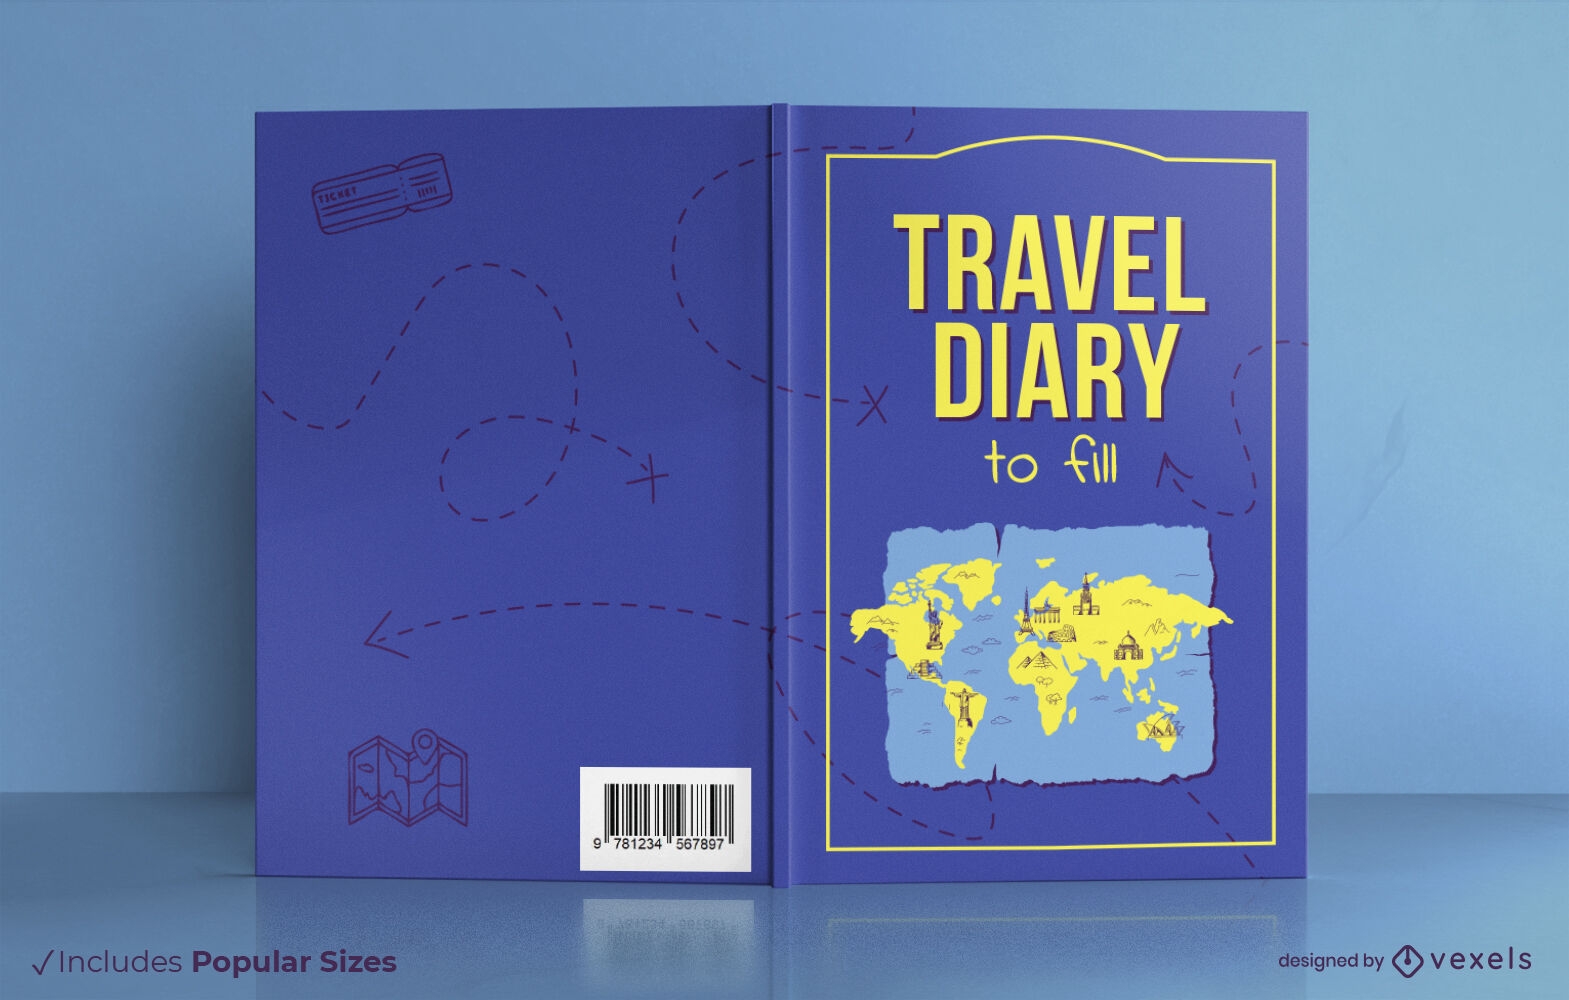 Travel diary book cover design